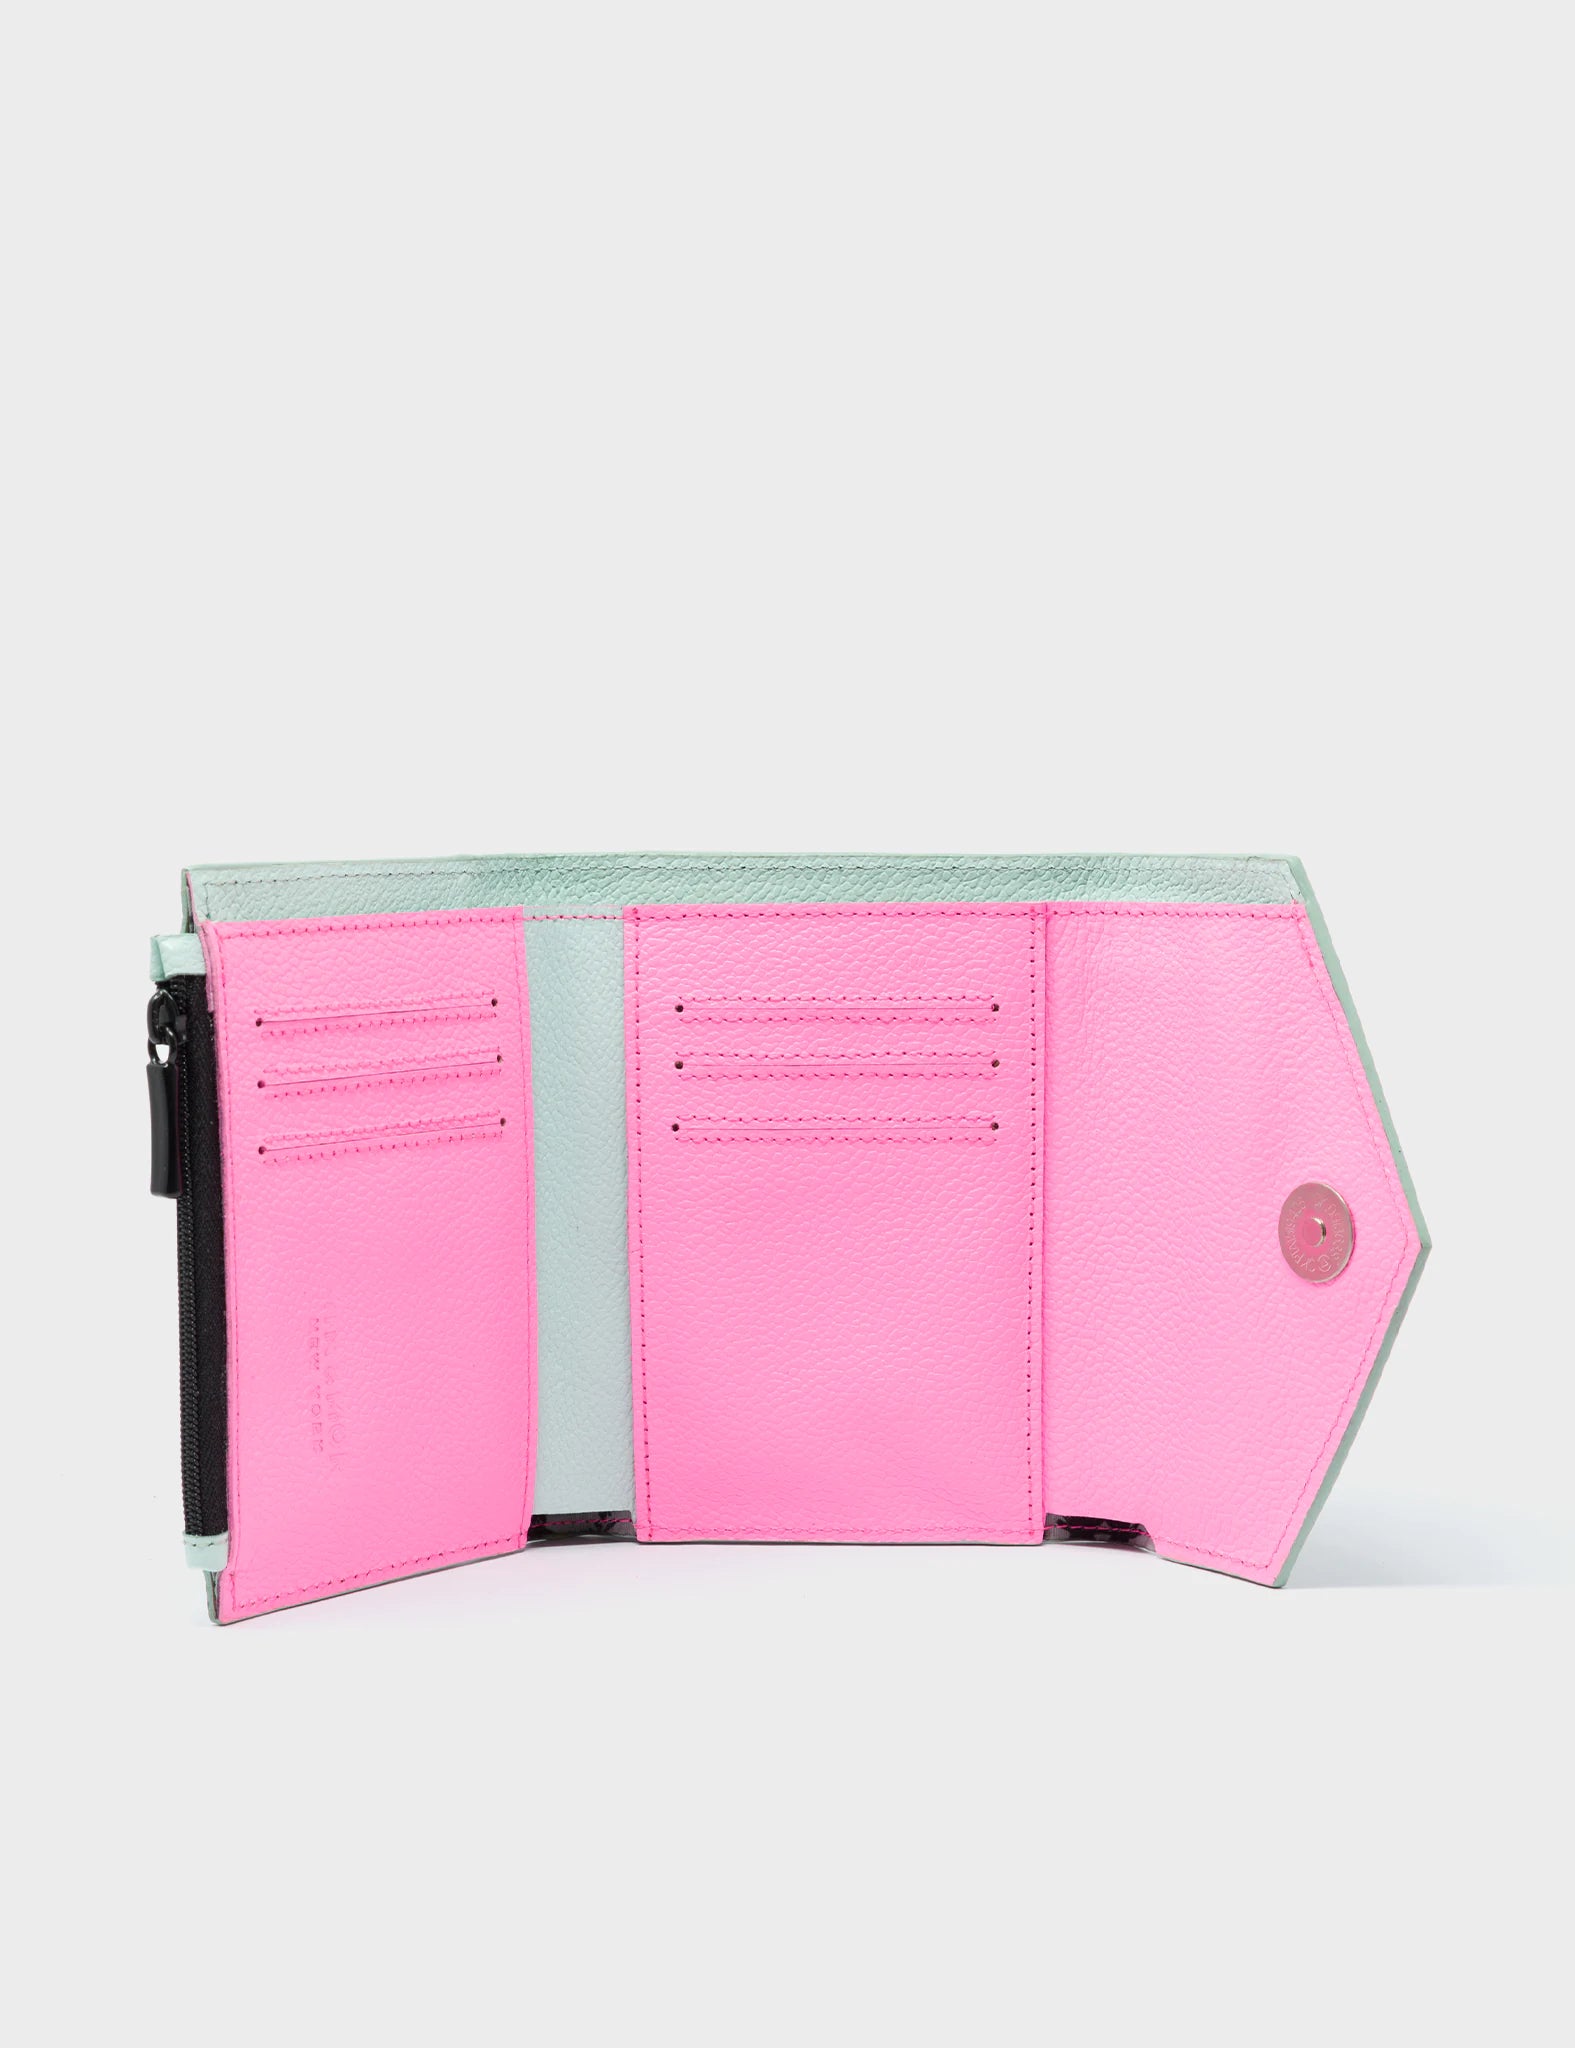 Fiona Biscay Green Leather Wallet - El Trópico Print Design - Inside 